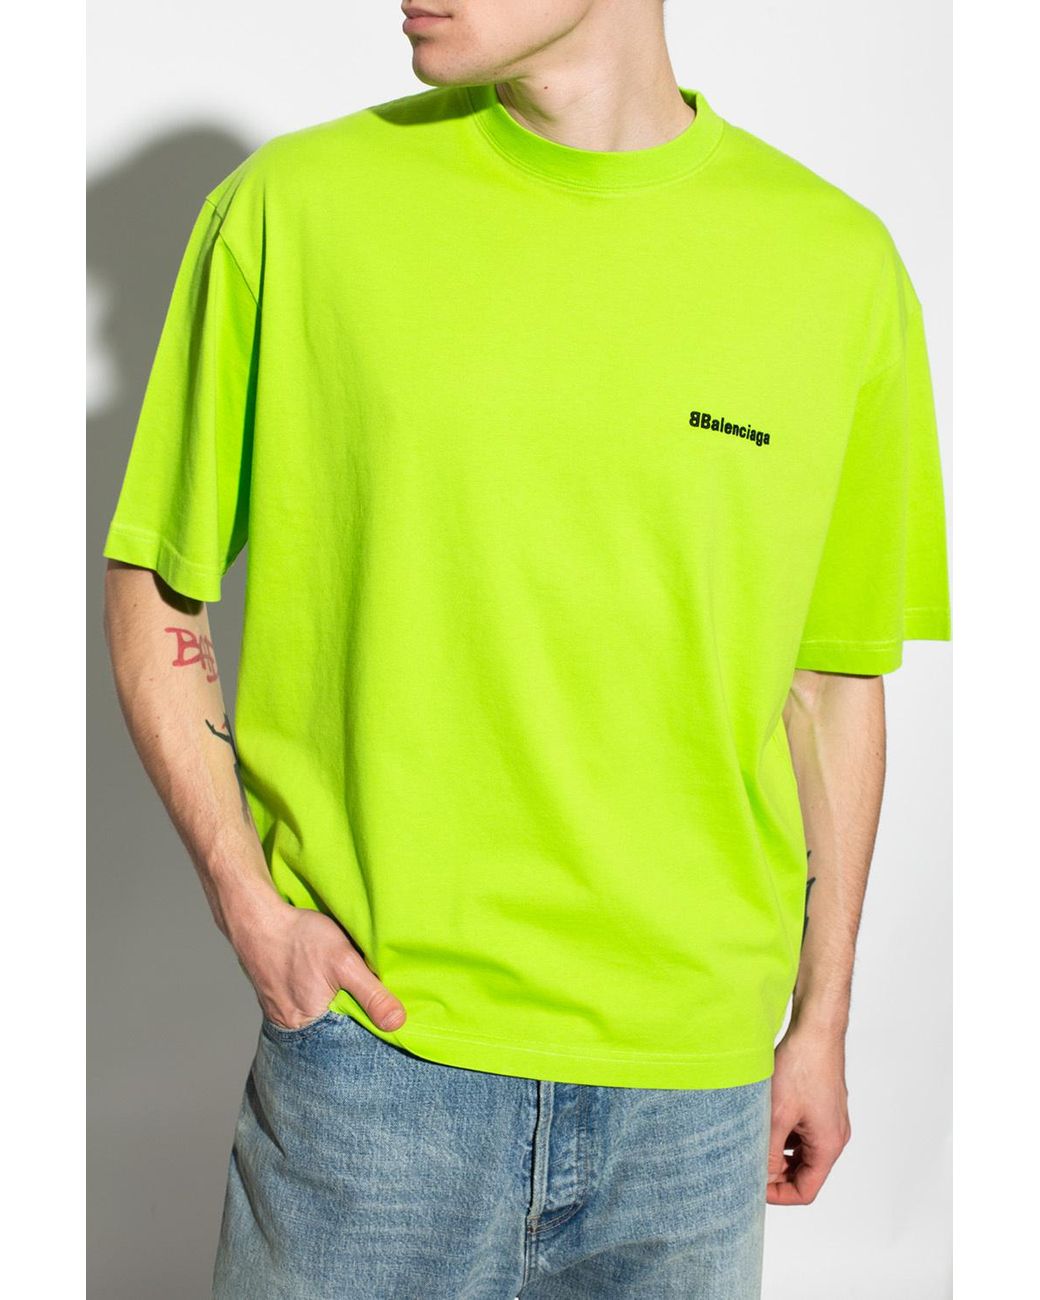 Green Monogrammed shirt Balenciaga  T Shirt Cinza Feminina Decote Redondo  Vi  IetpShops GB